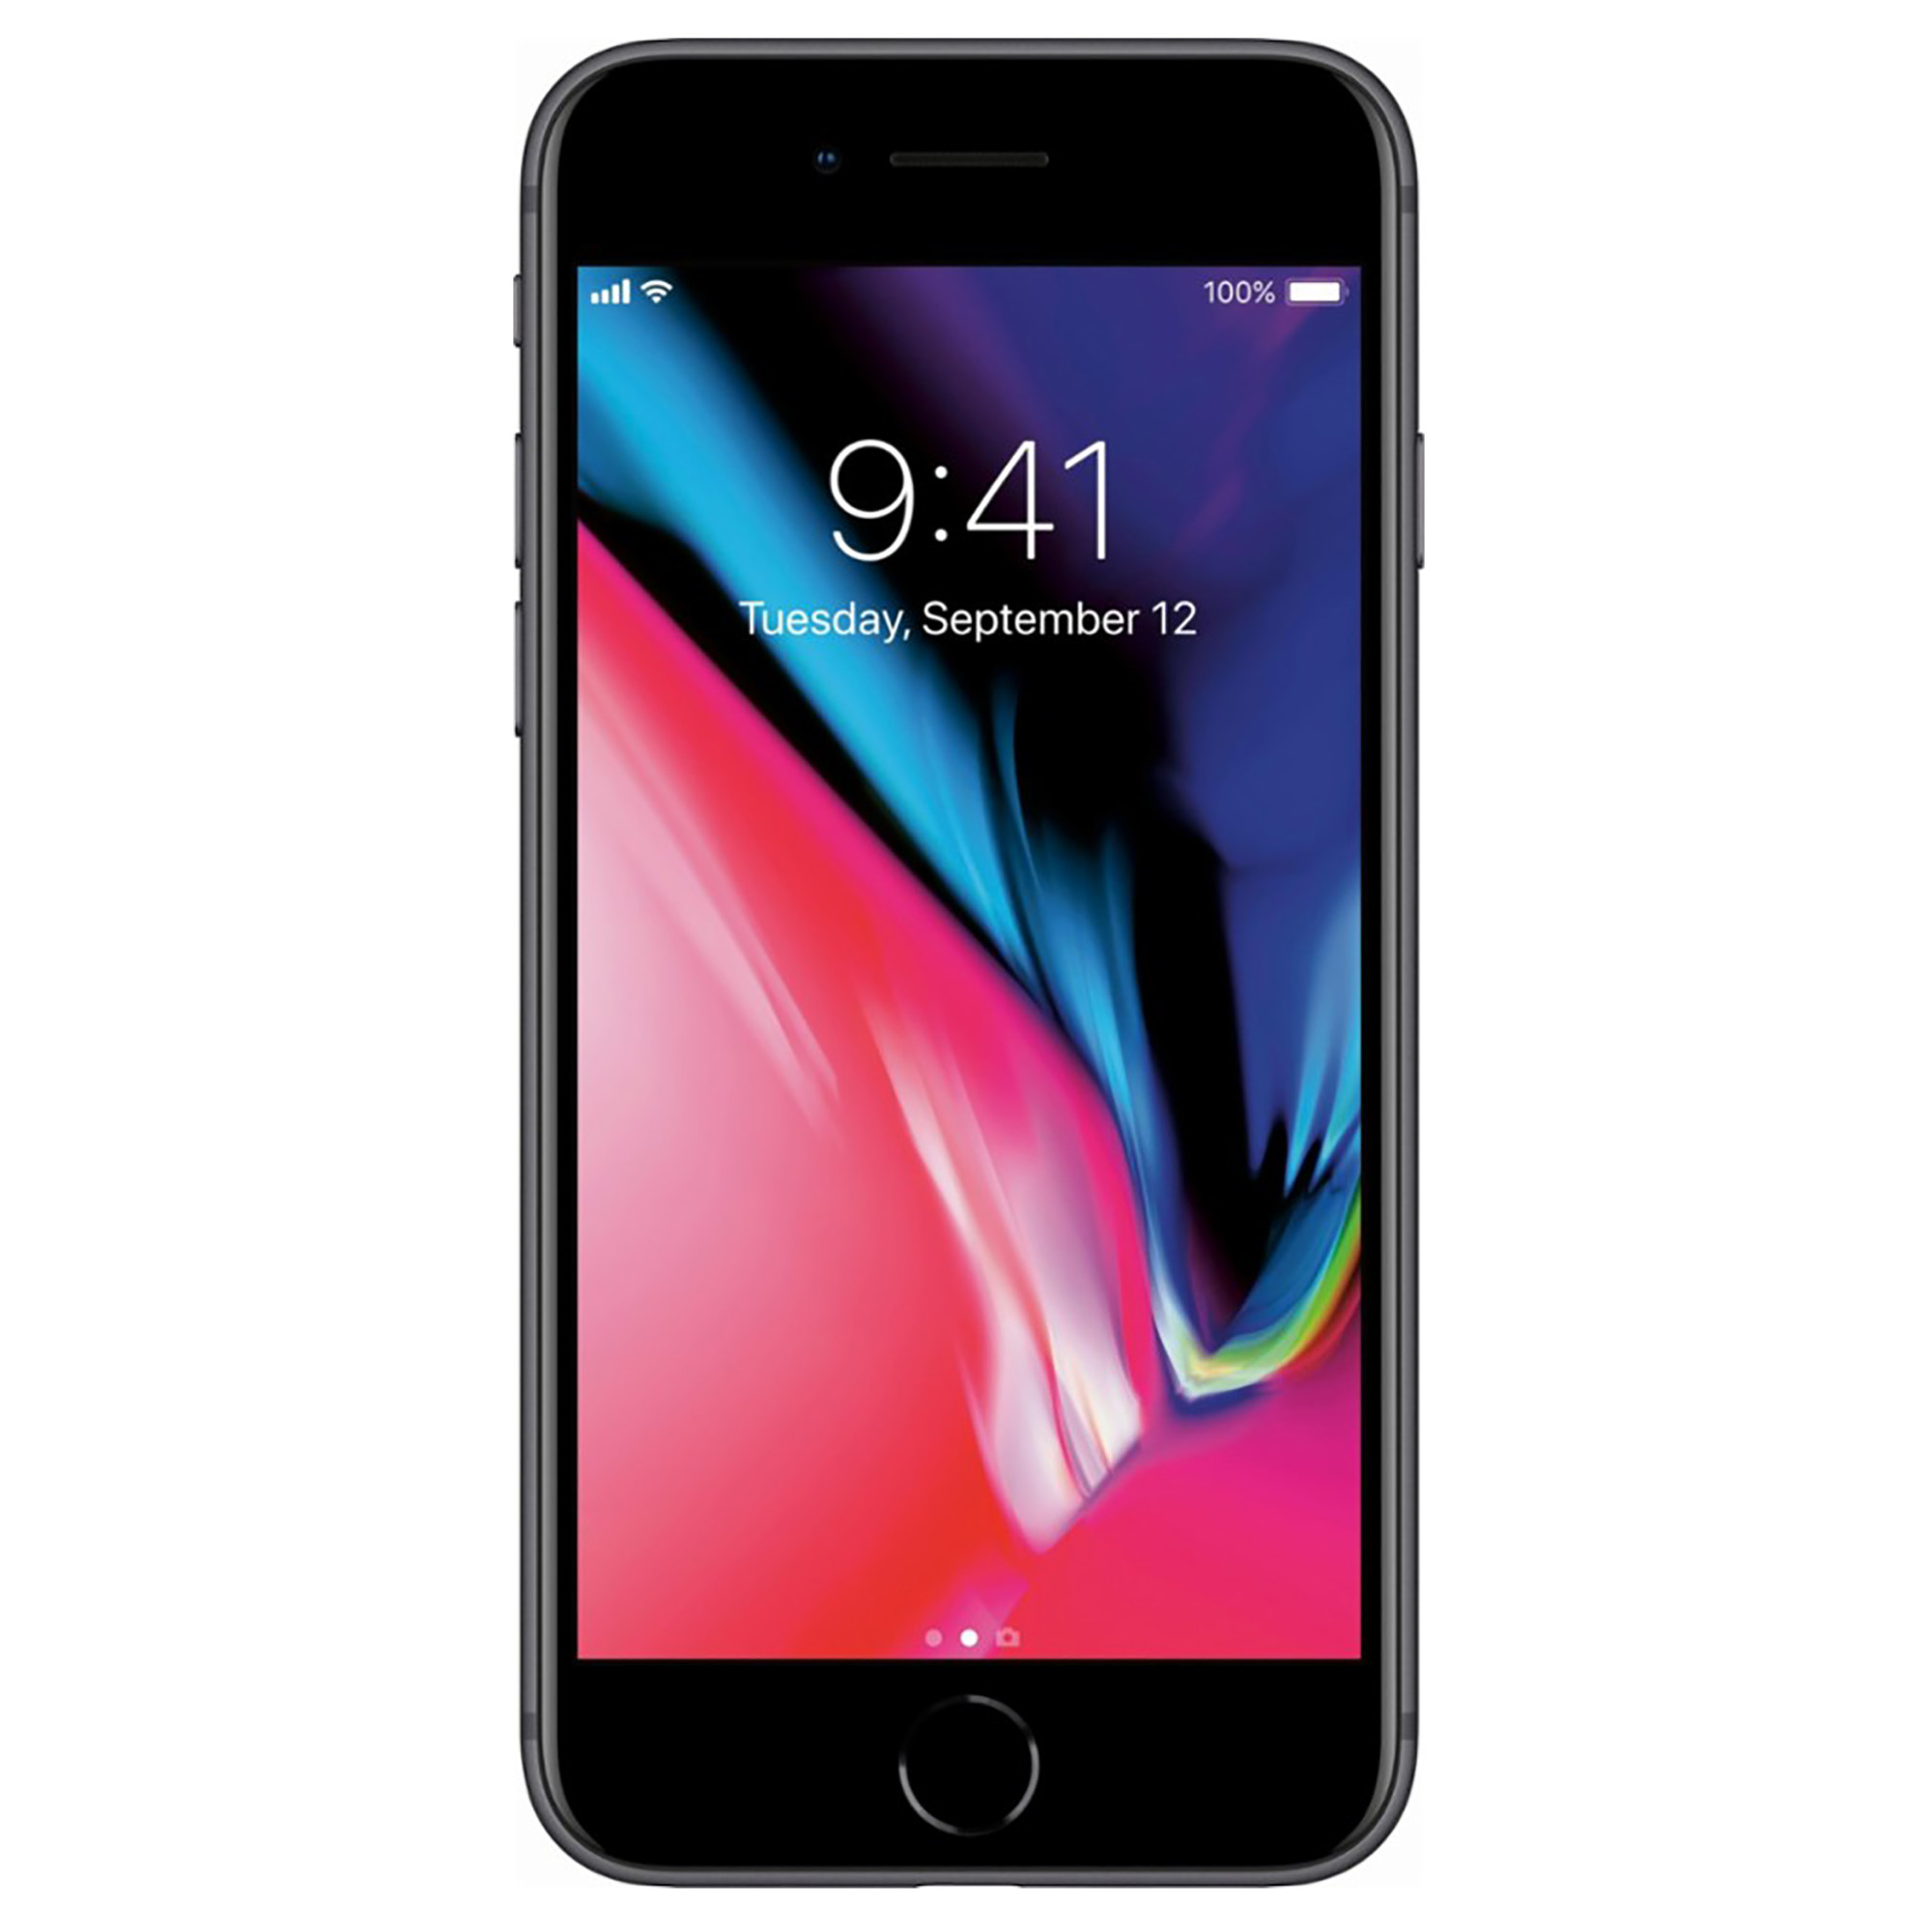 Apple iPhone 8 64GB Unlocked GSM/CDMA Phone w/ 12MP Camera - Space Gray  (Used) - Walmart.com